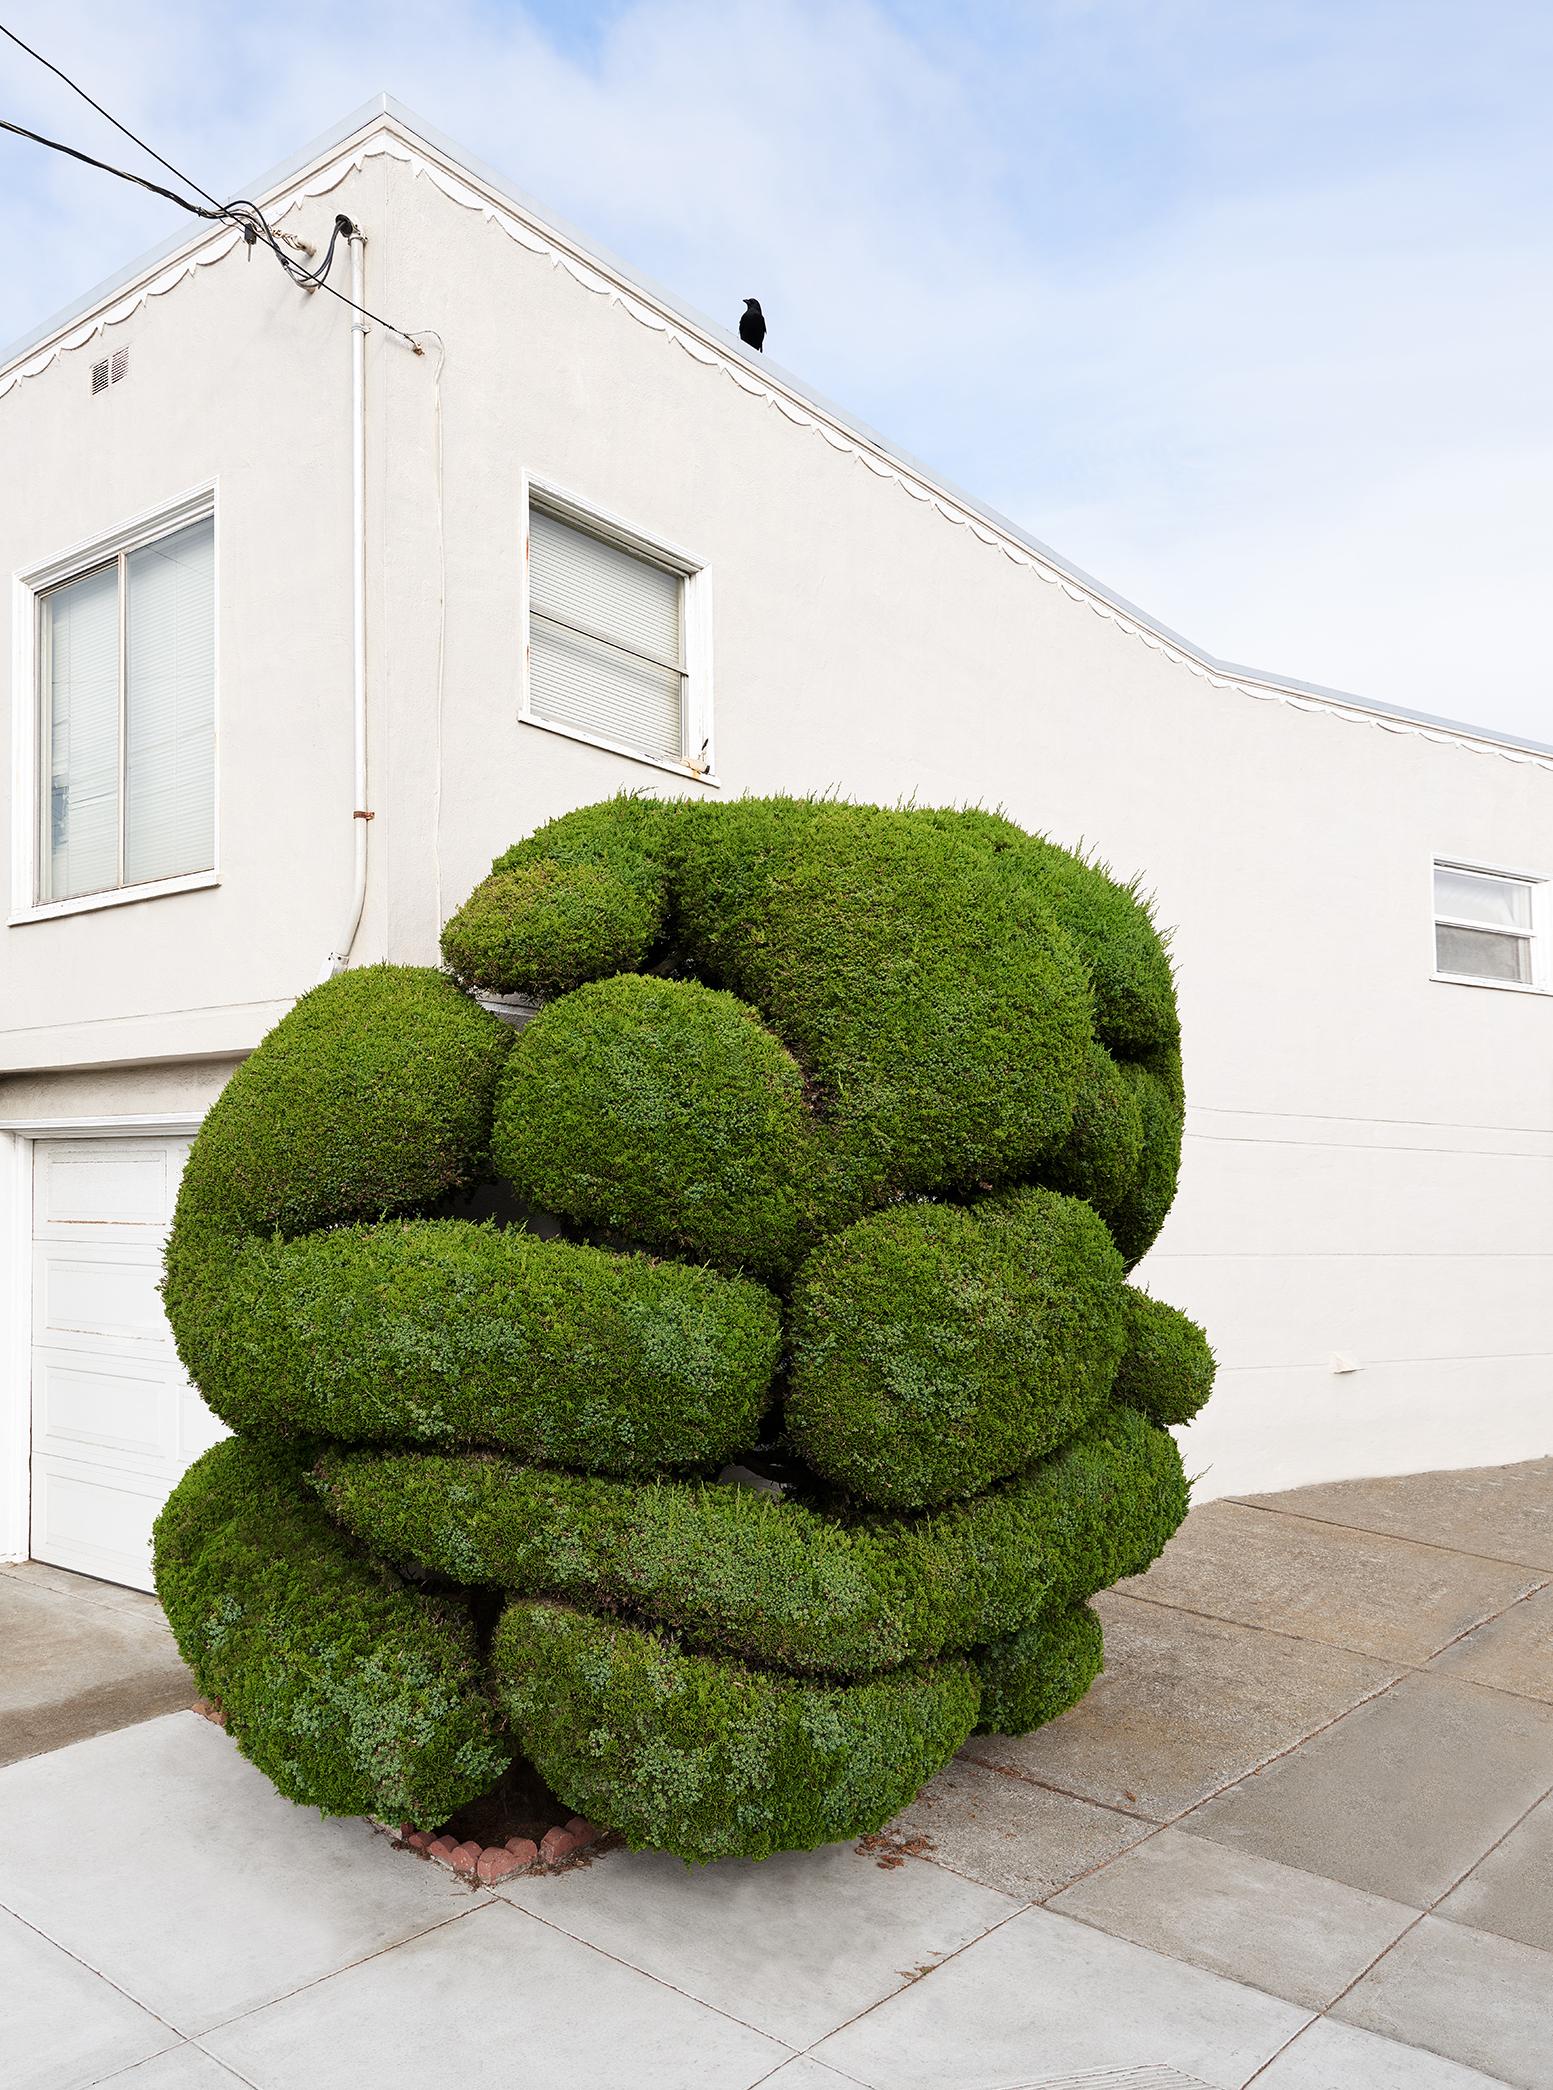 Frank Schott Landscape Print - Topiary V - large format photograph of ornamental shaped tree